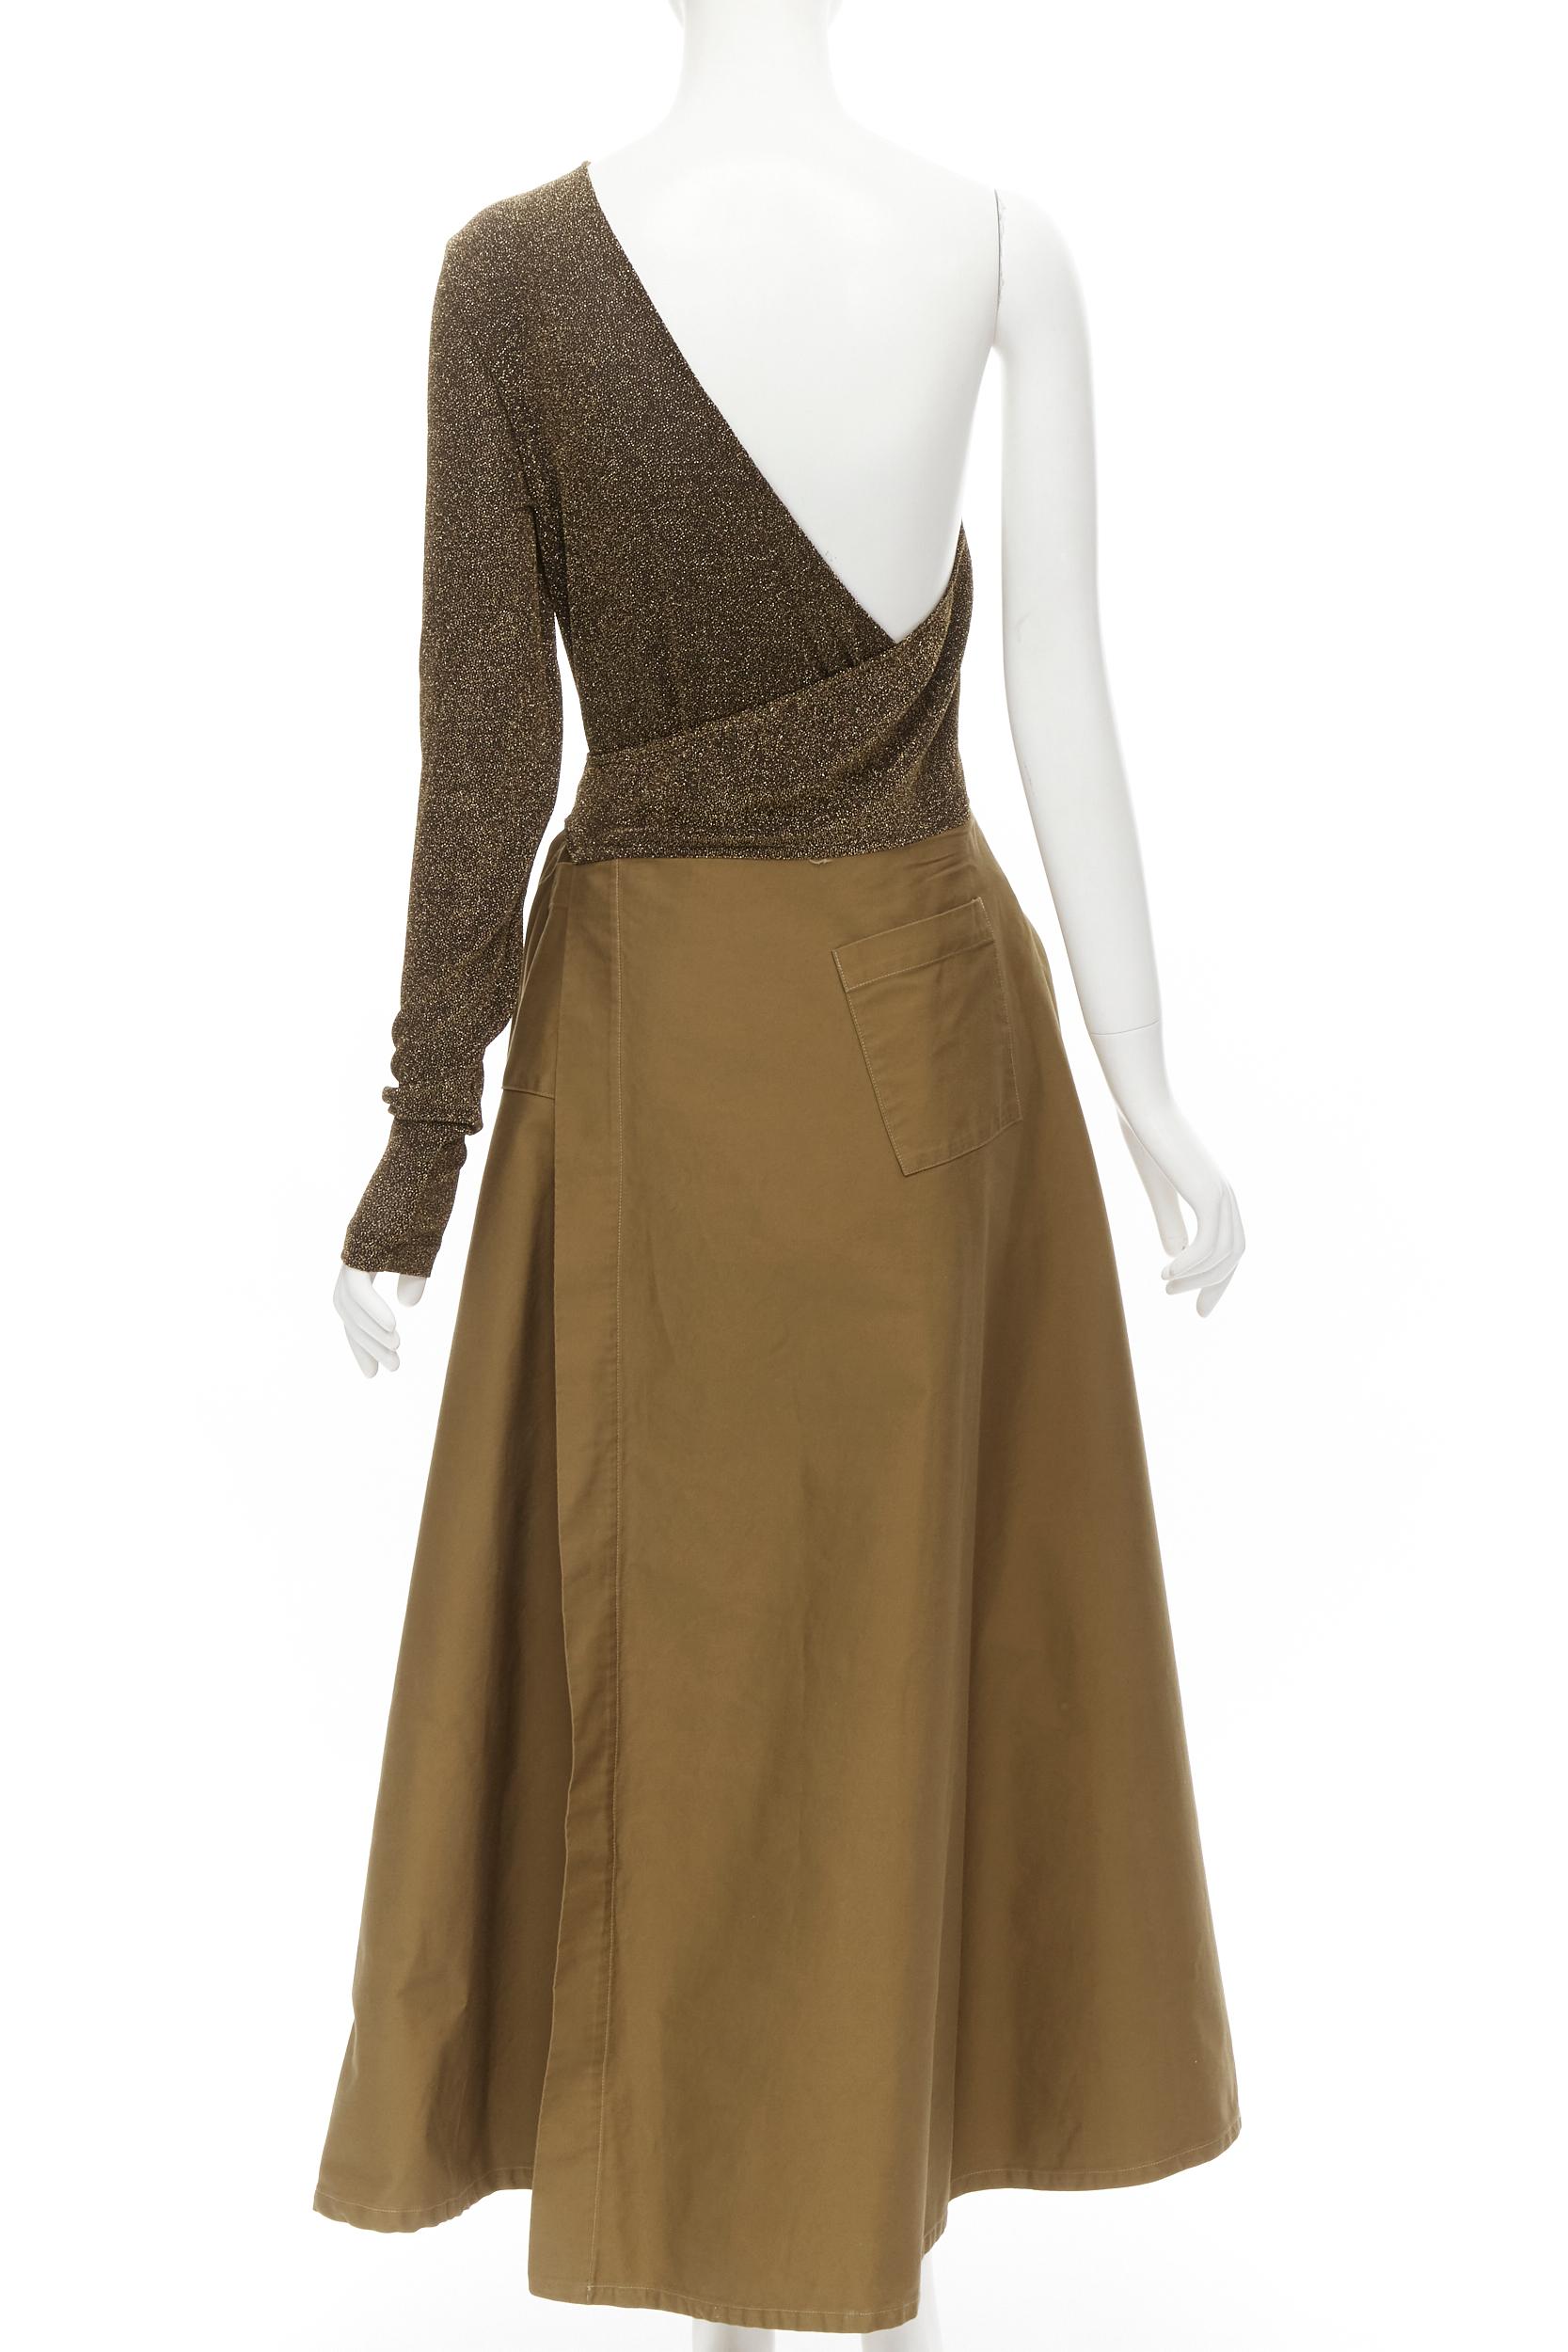 ARTCLUB Casa Miller gold lurex brown cotton twill wrap maxi dress M For Sale 1